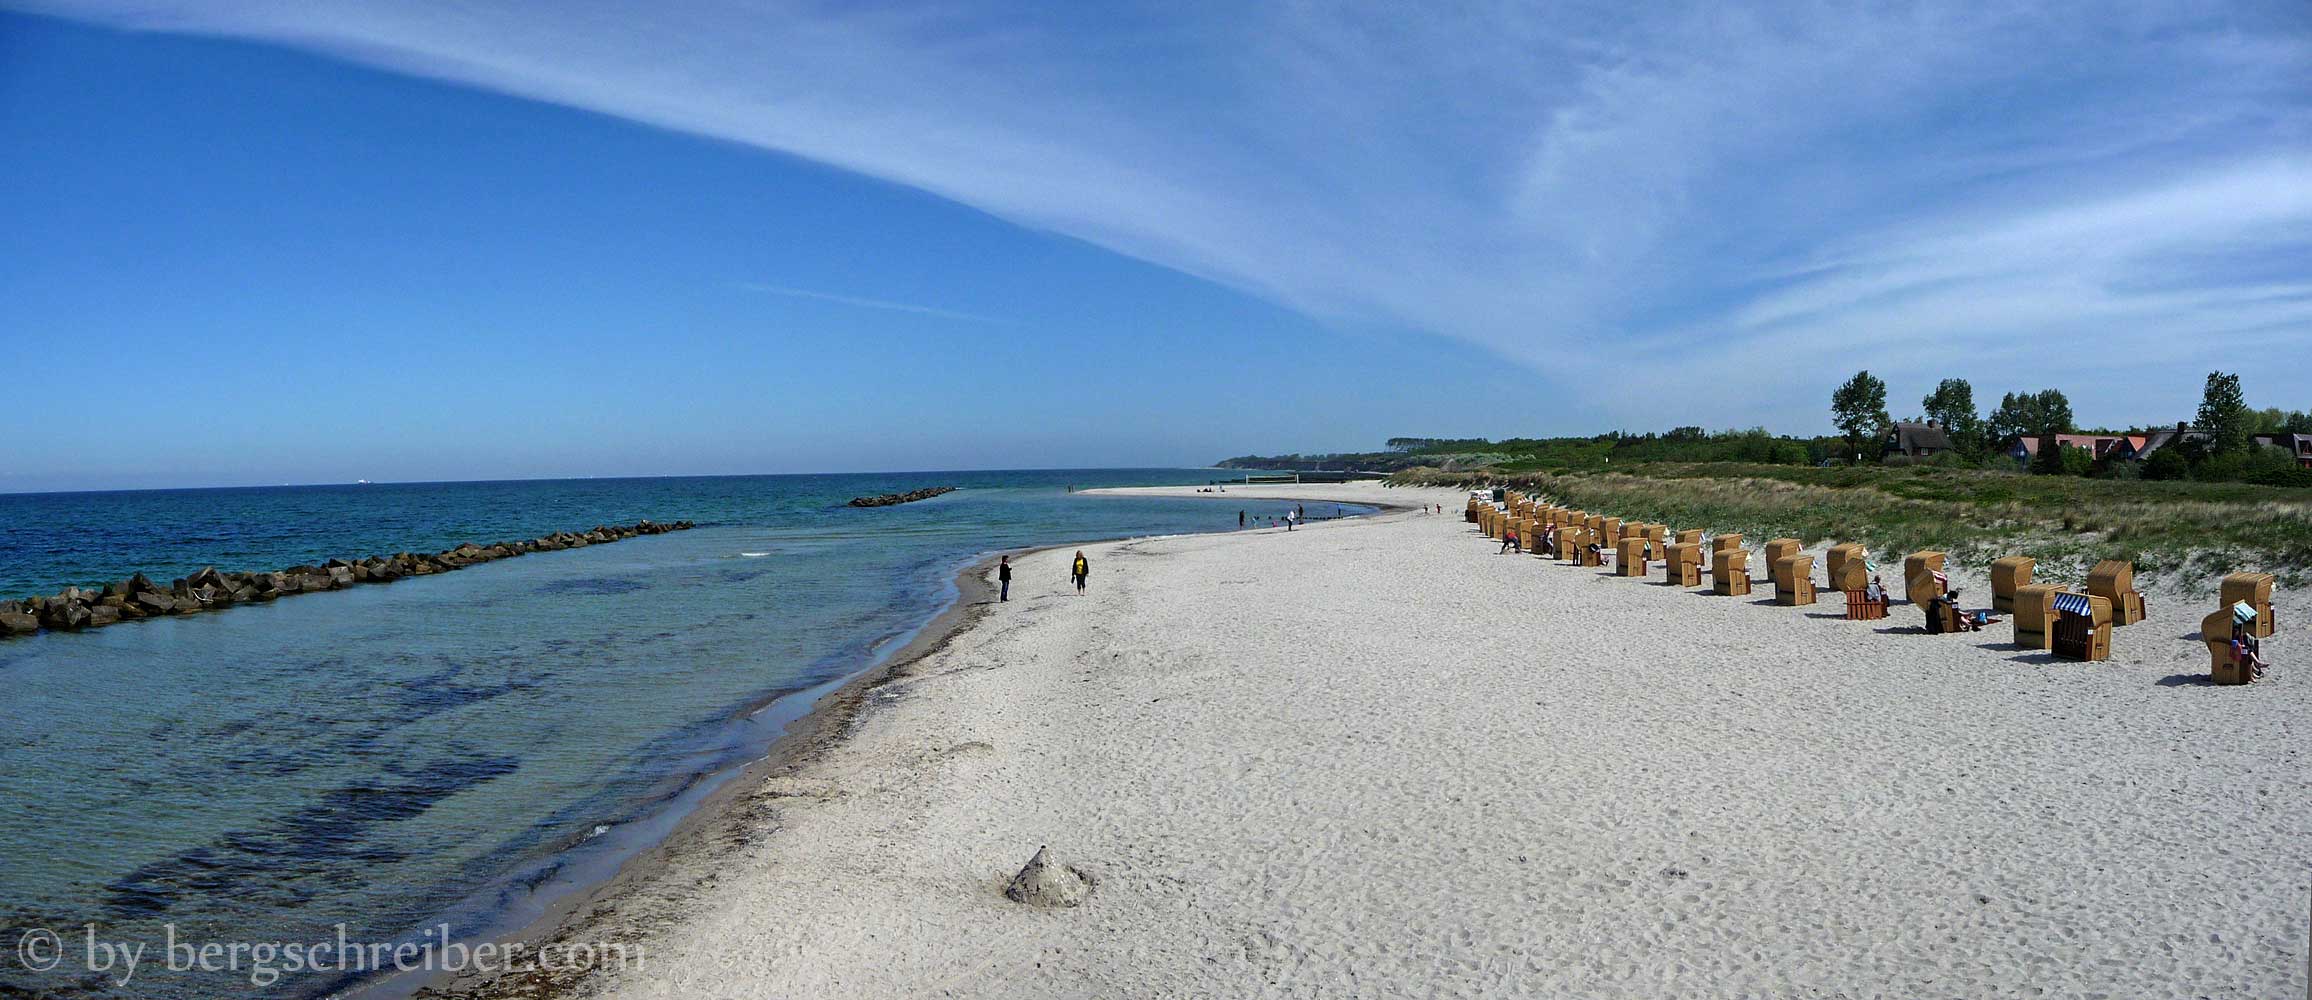 Ostsee Strandkörbe